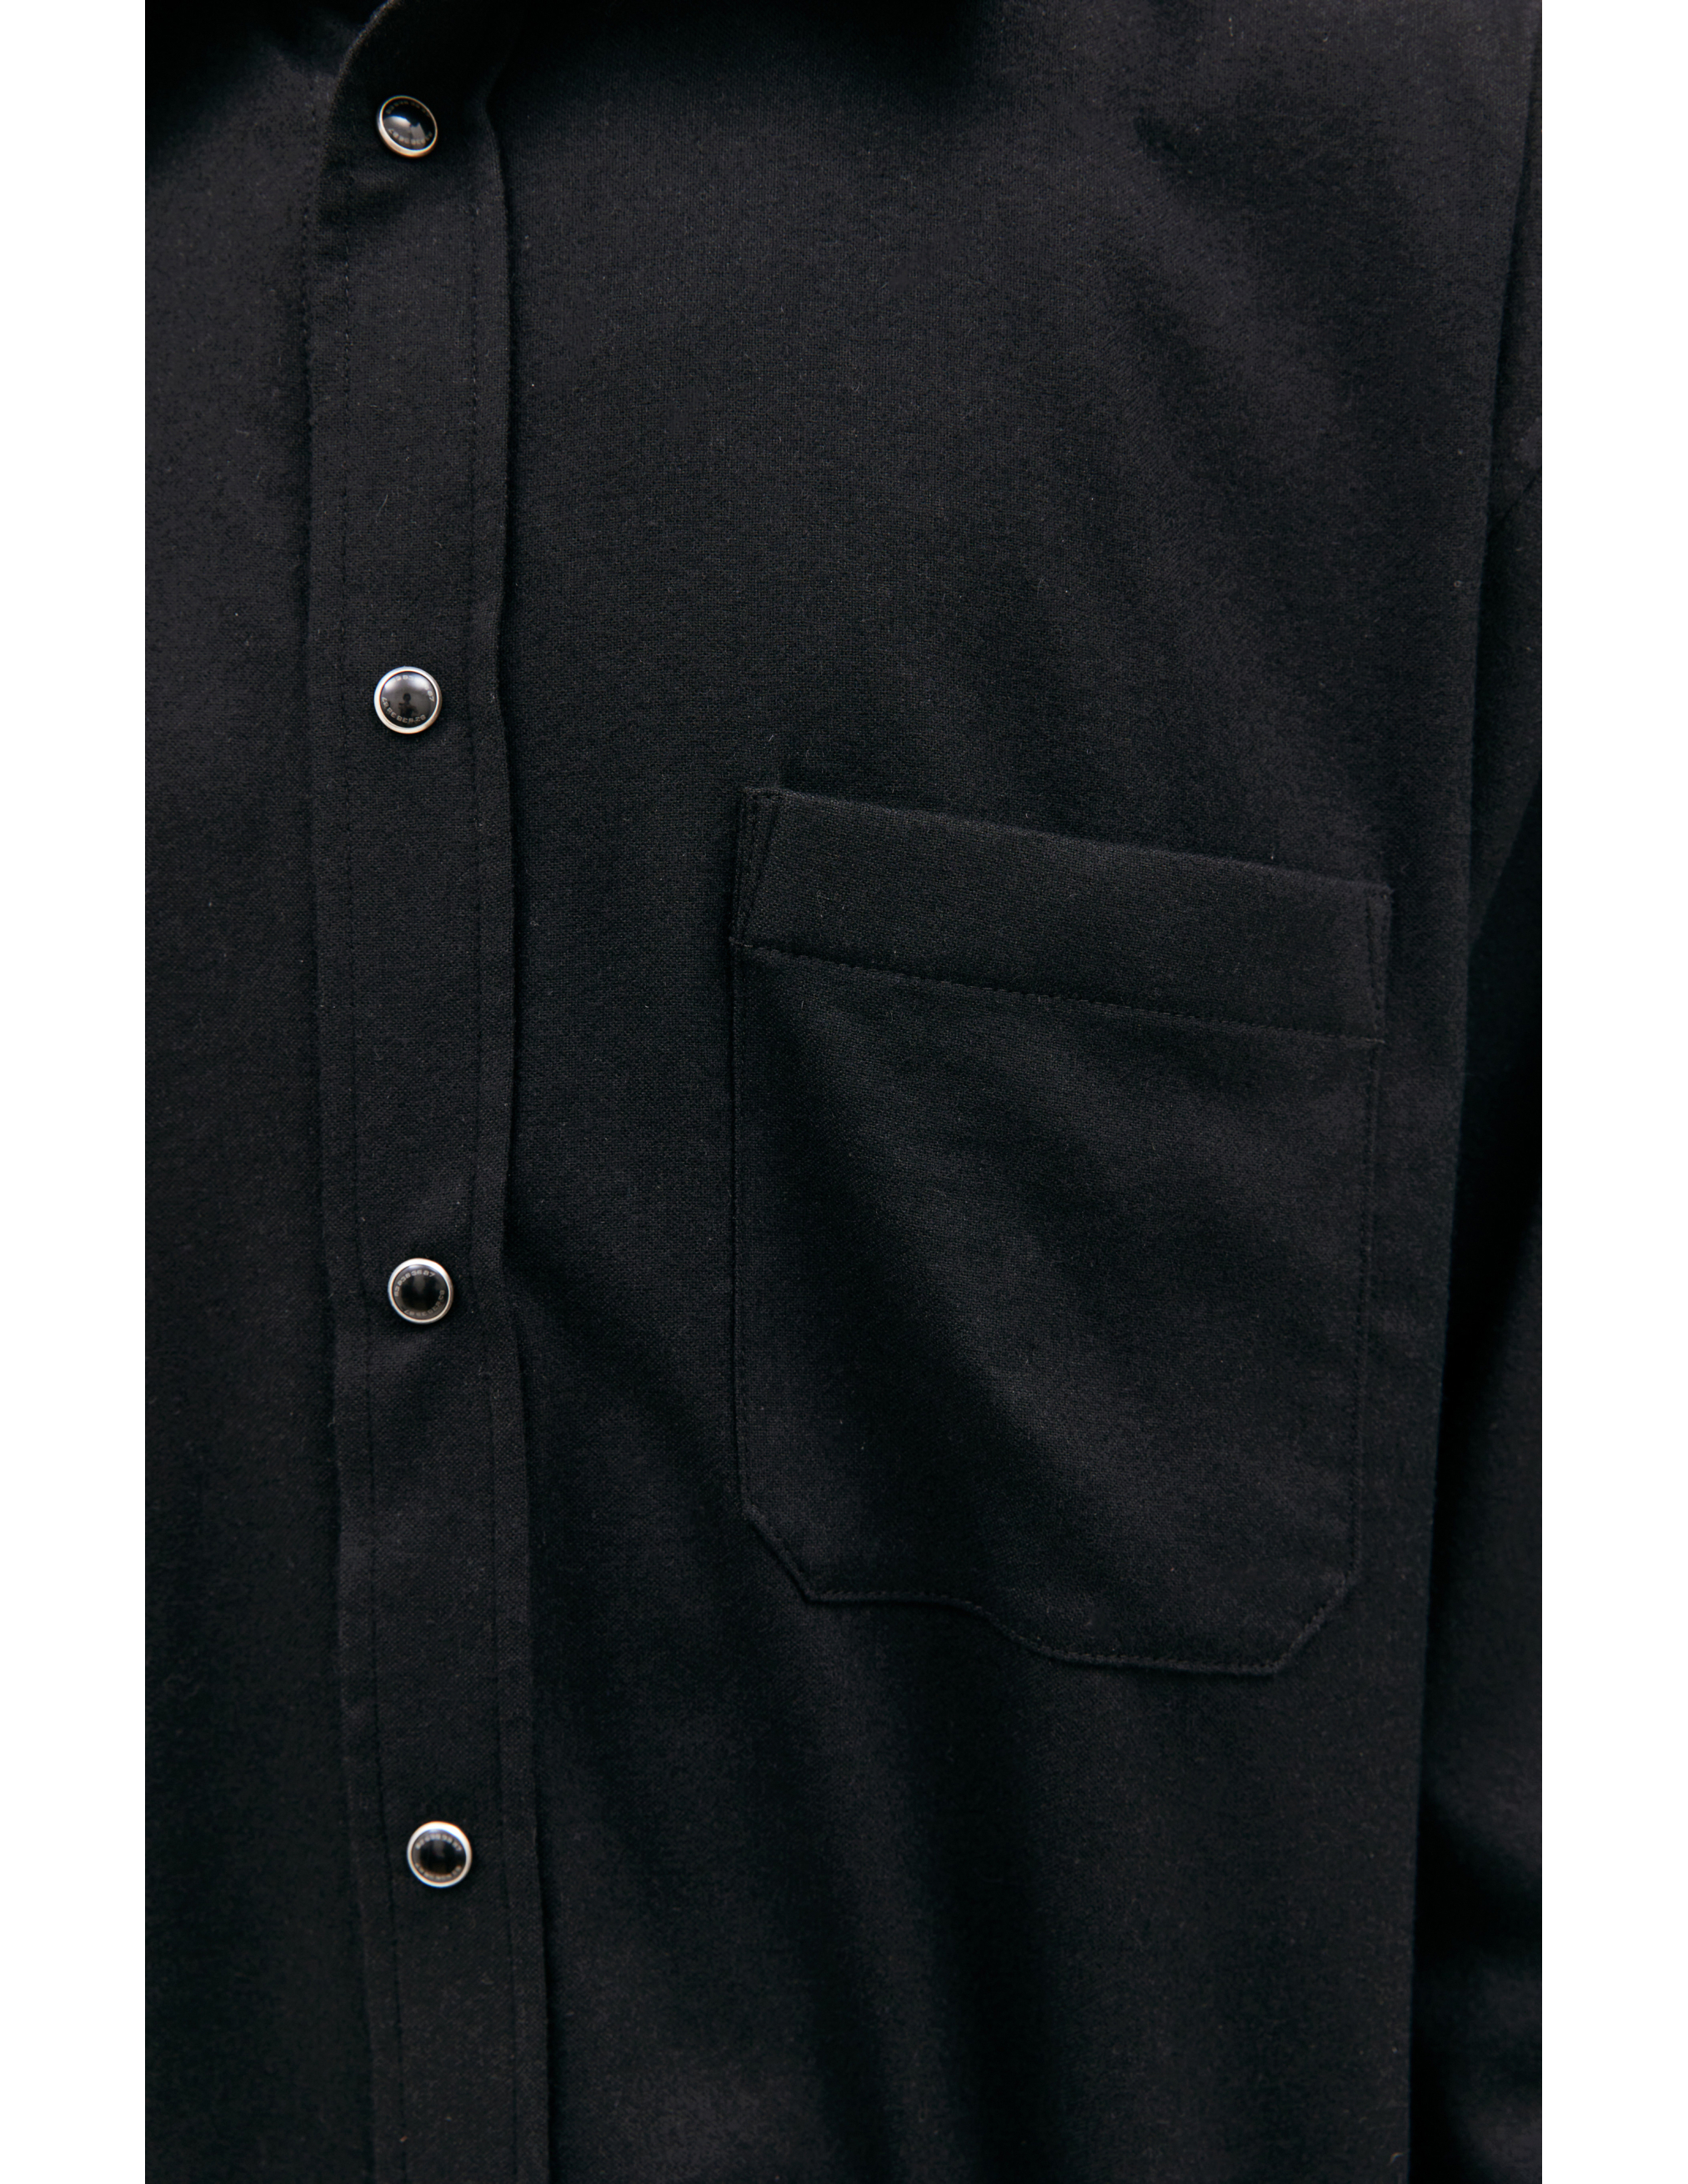 Черная рубашка на кнопках VTMNTS VL20SH240B/5039, размер L;XL VL20SH240B/5039 - фото 4